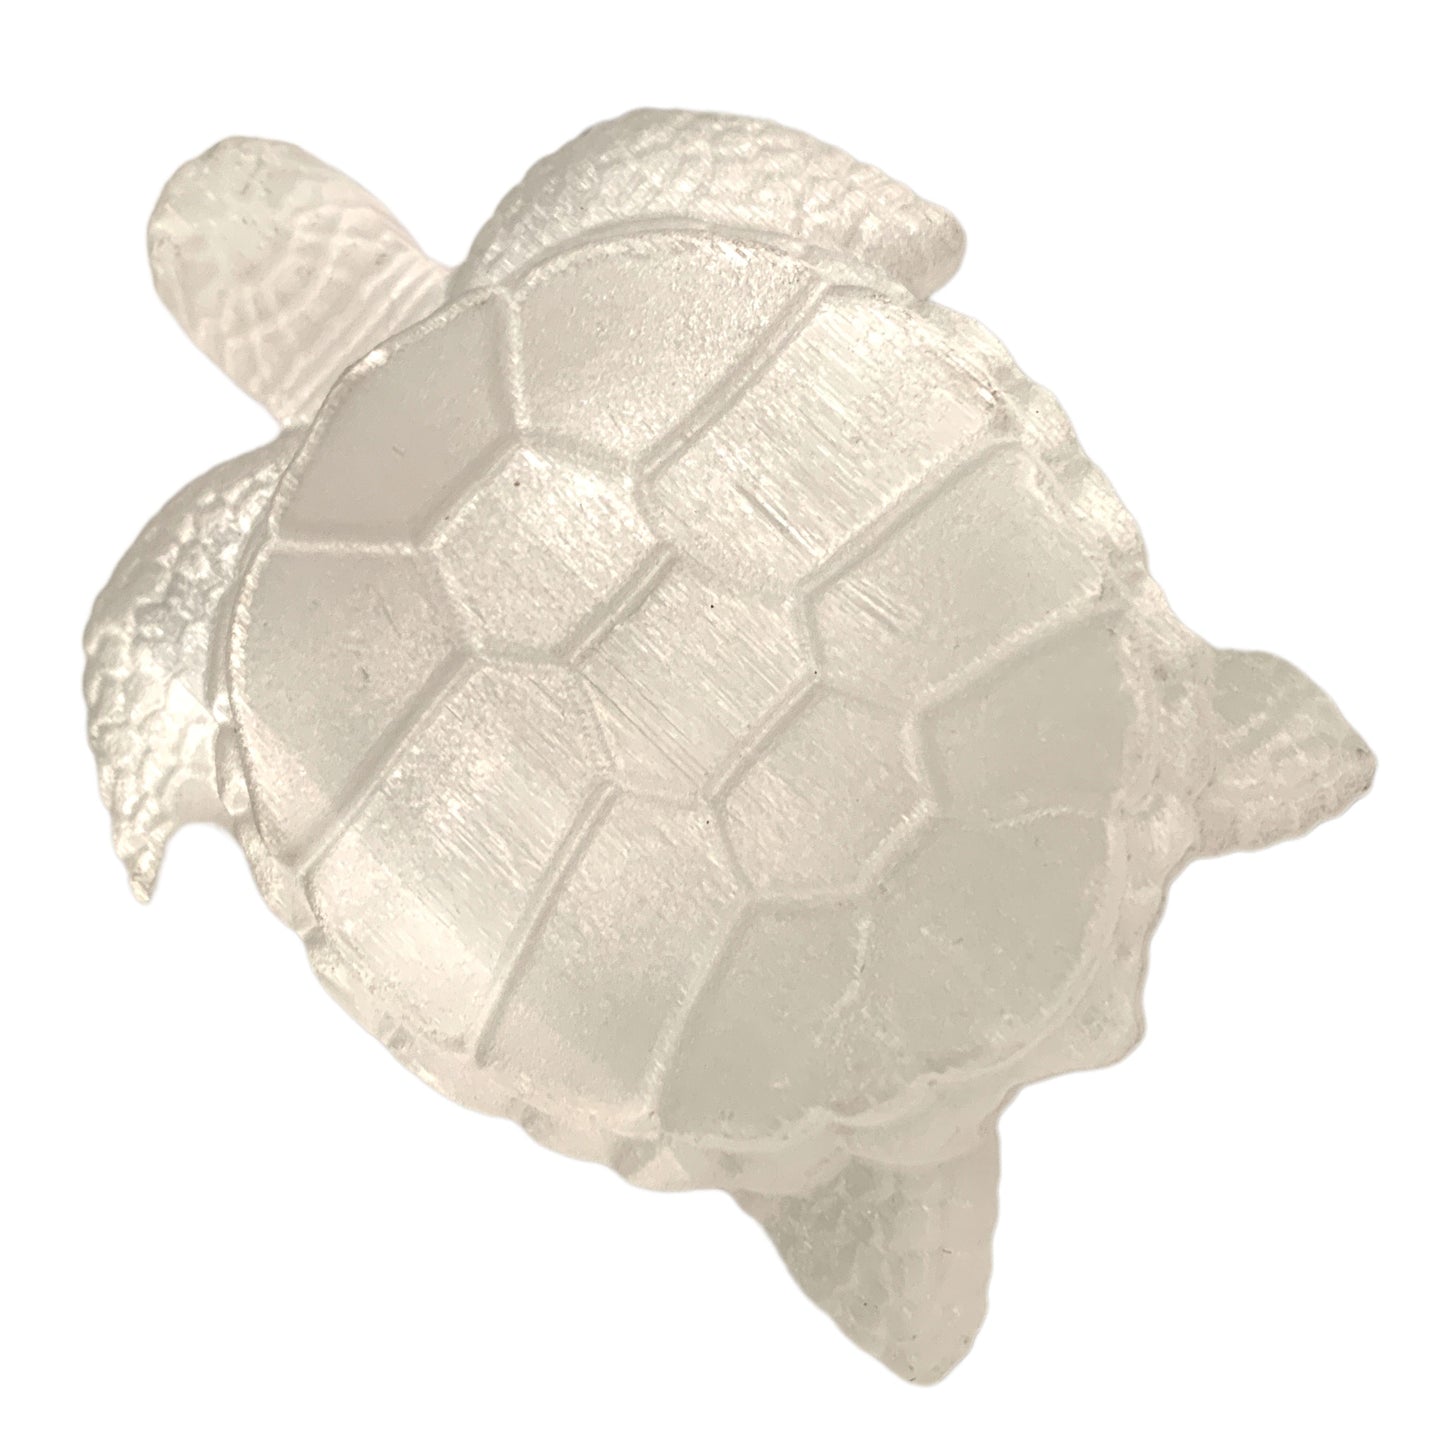 Tortoise Bowl 3" - Selenite - Hand Carved - China - NEW922